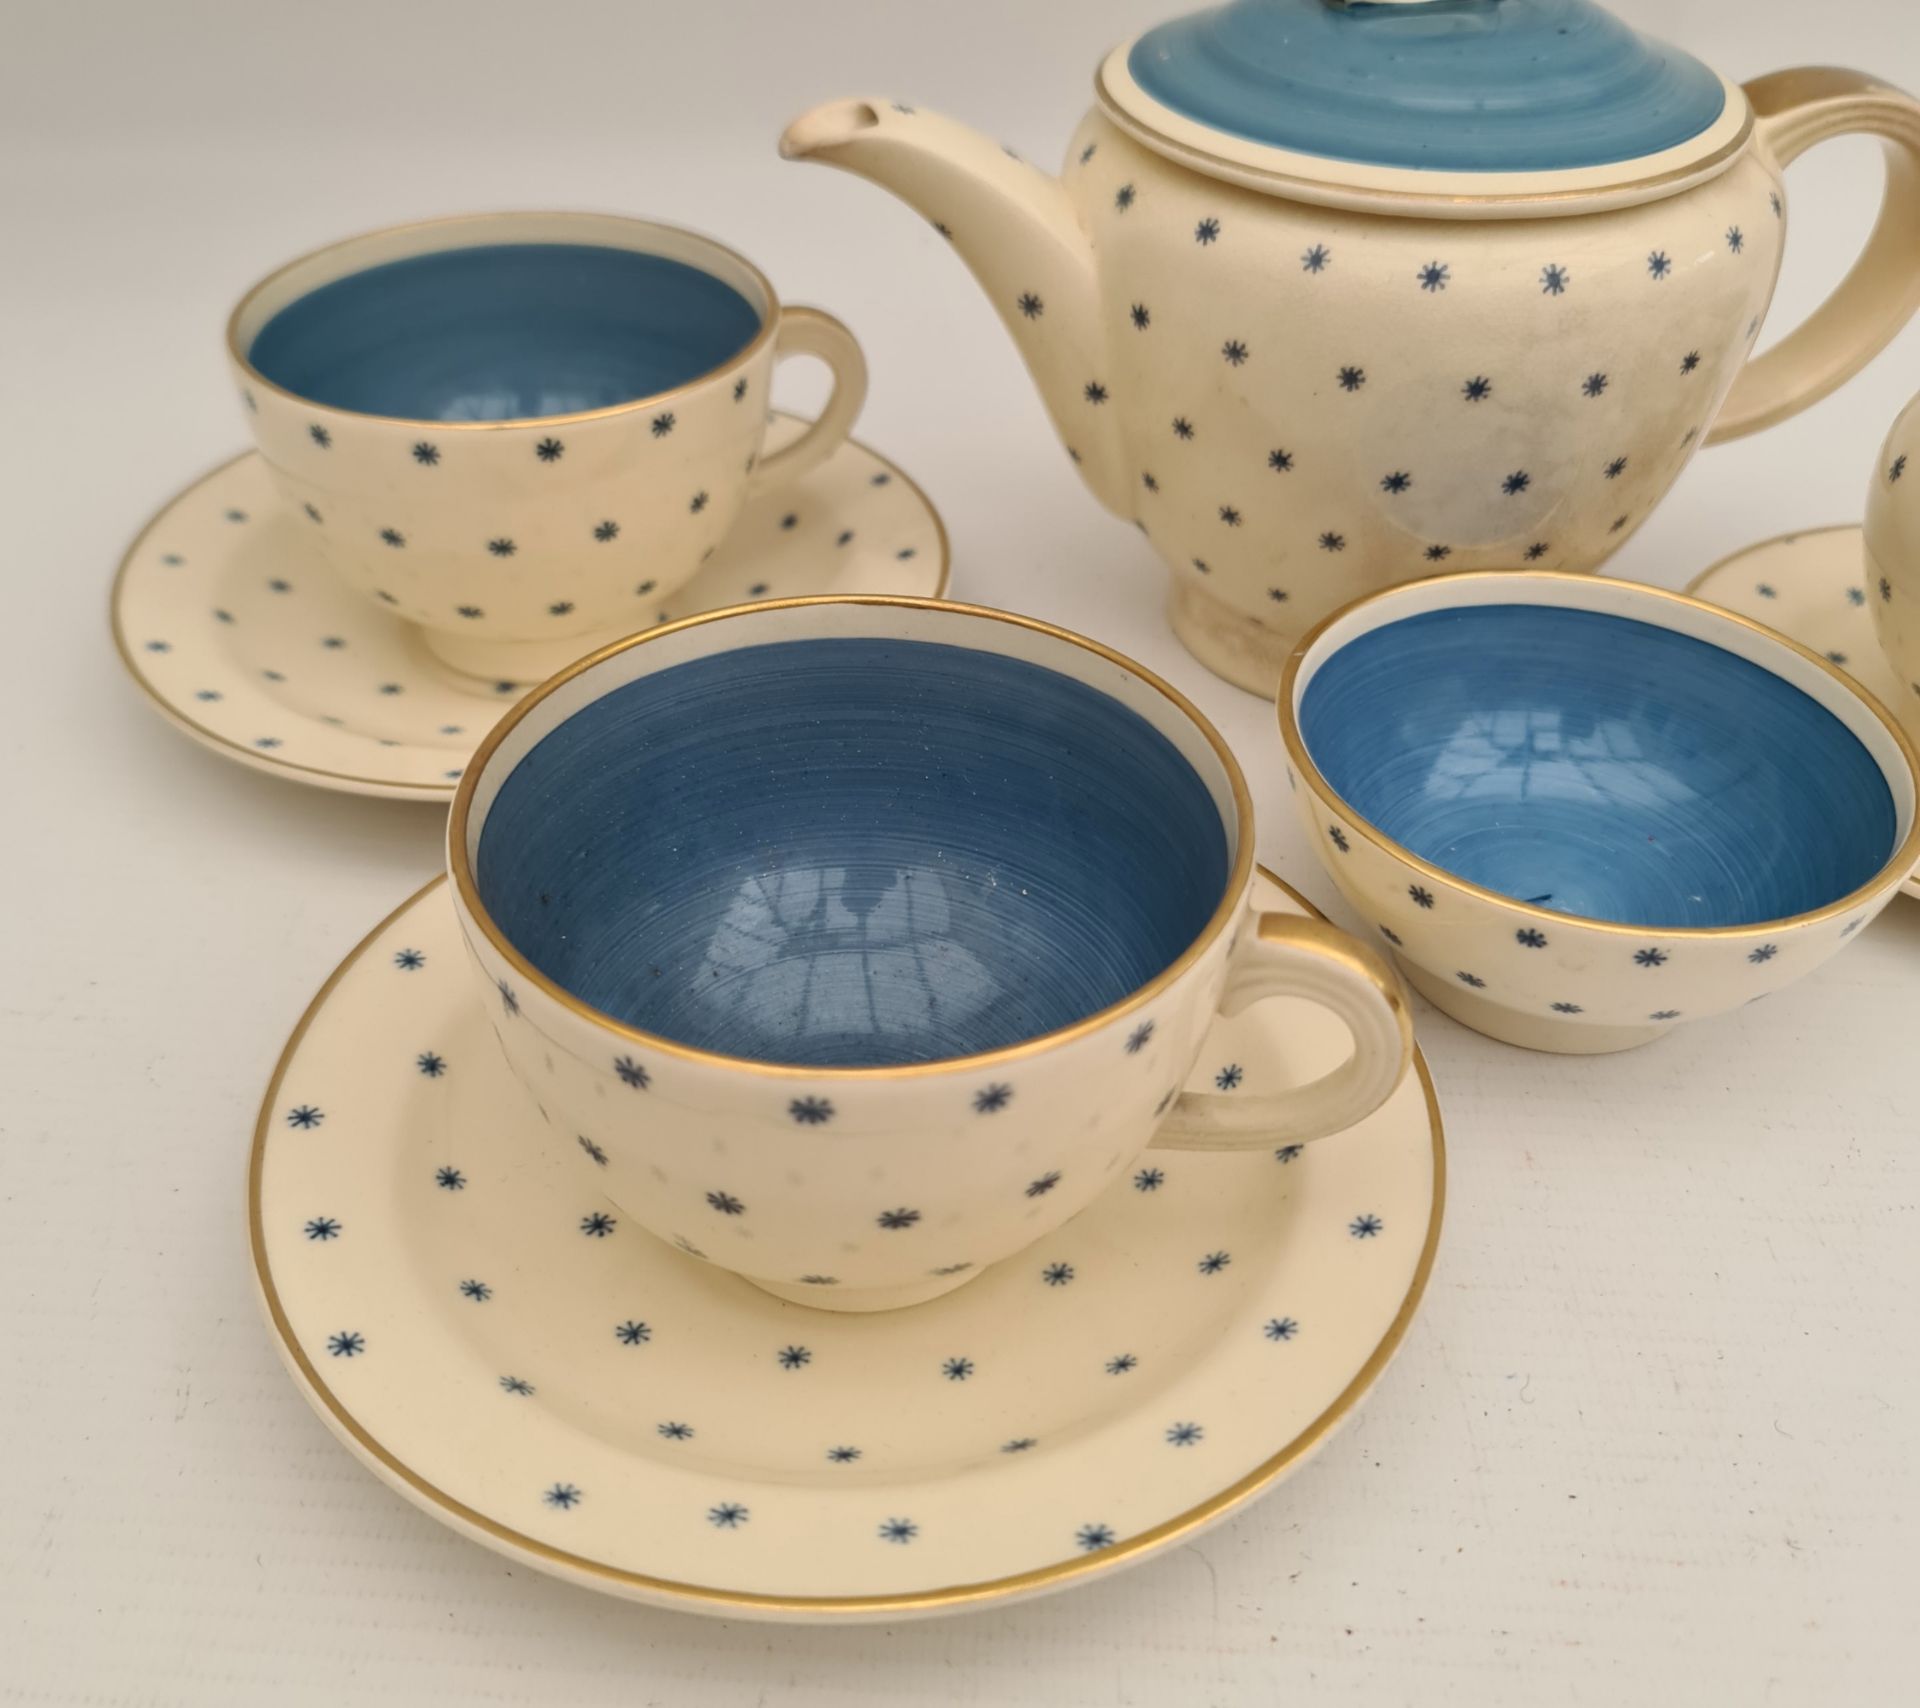 Vintage Susie Cooper Tea Pot Plus Cups Saucers Milk & Sugar Star Burst Pattern - Image 2 of 2